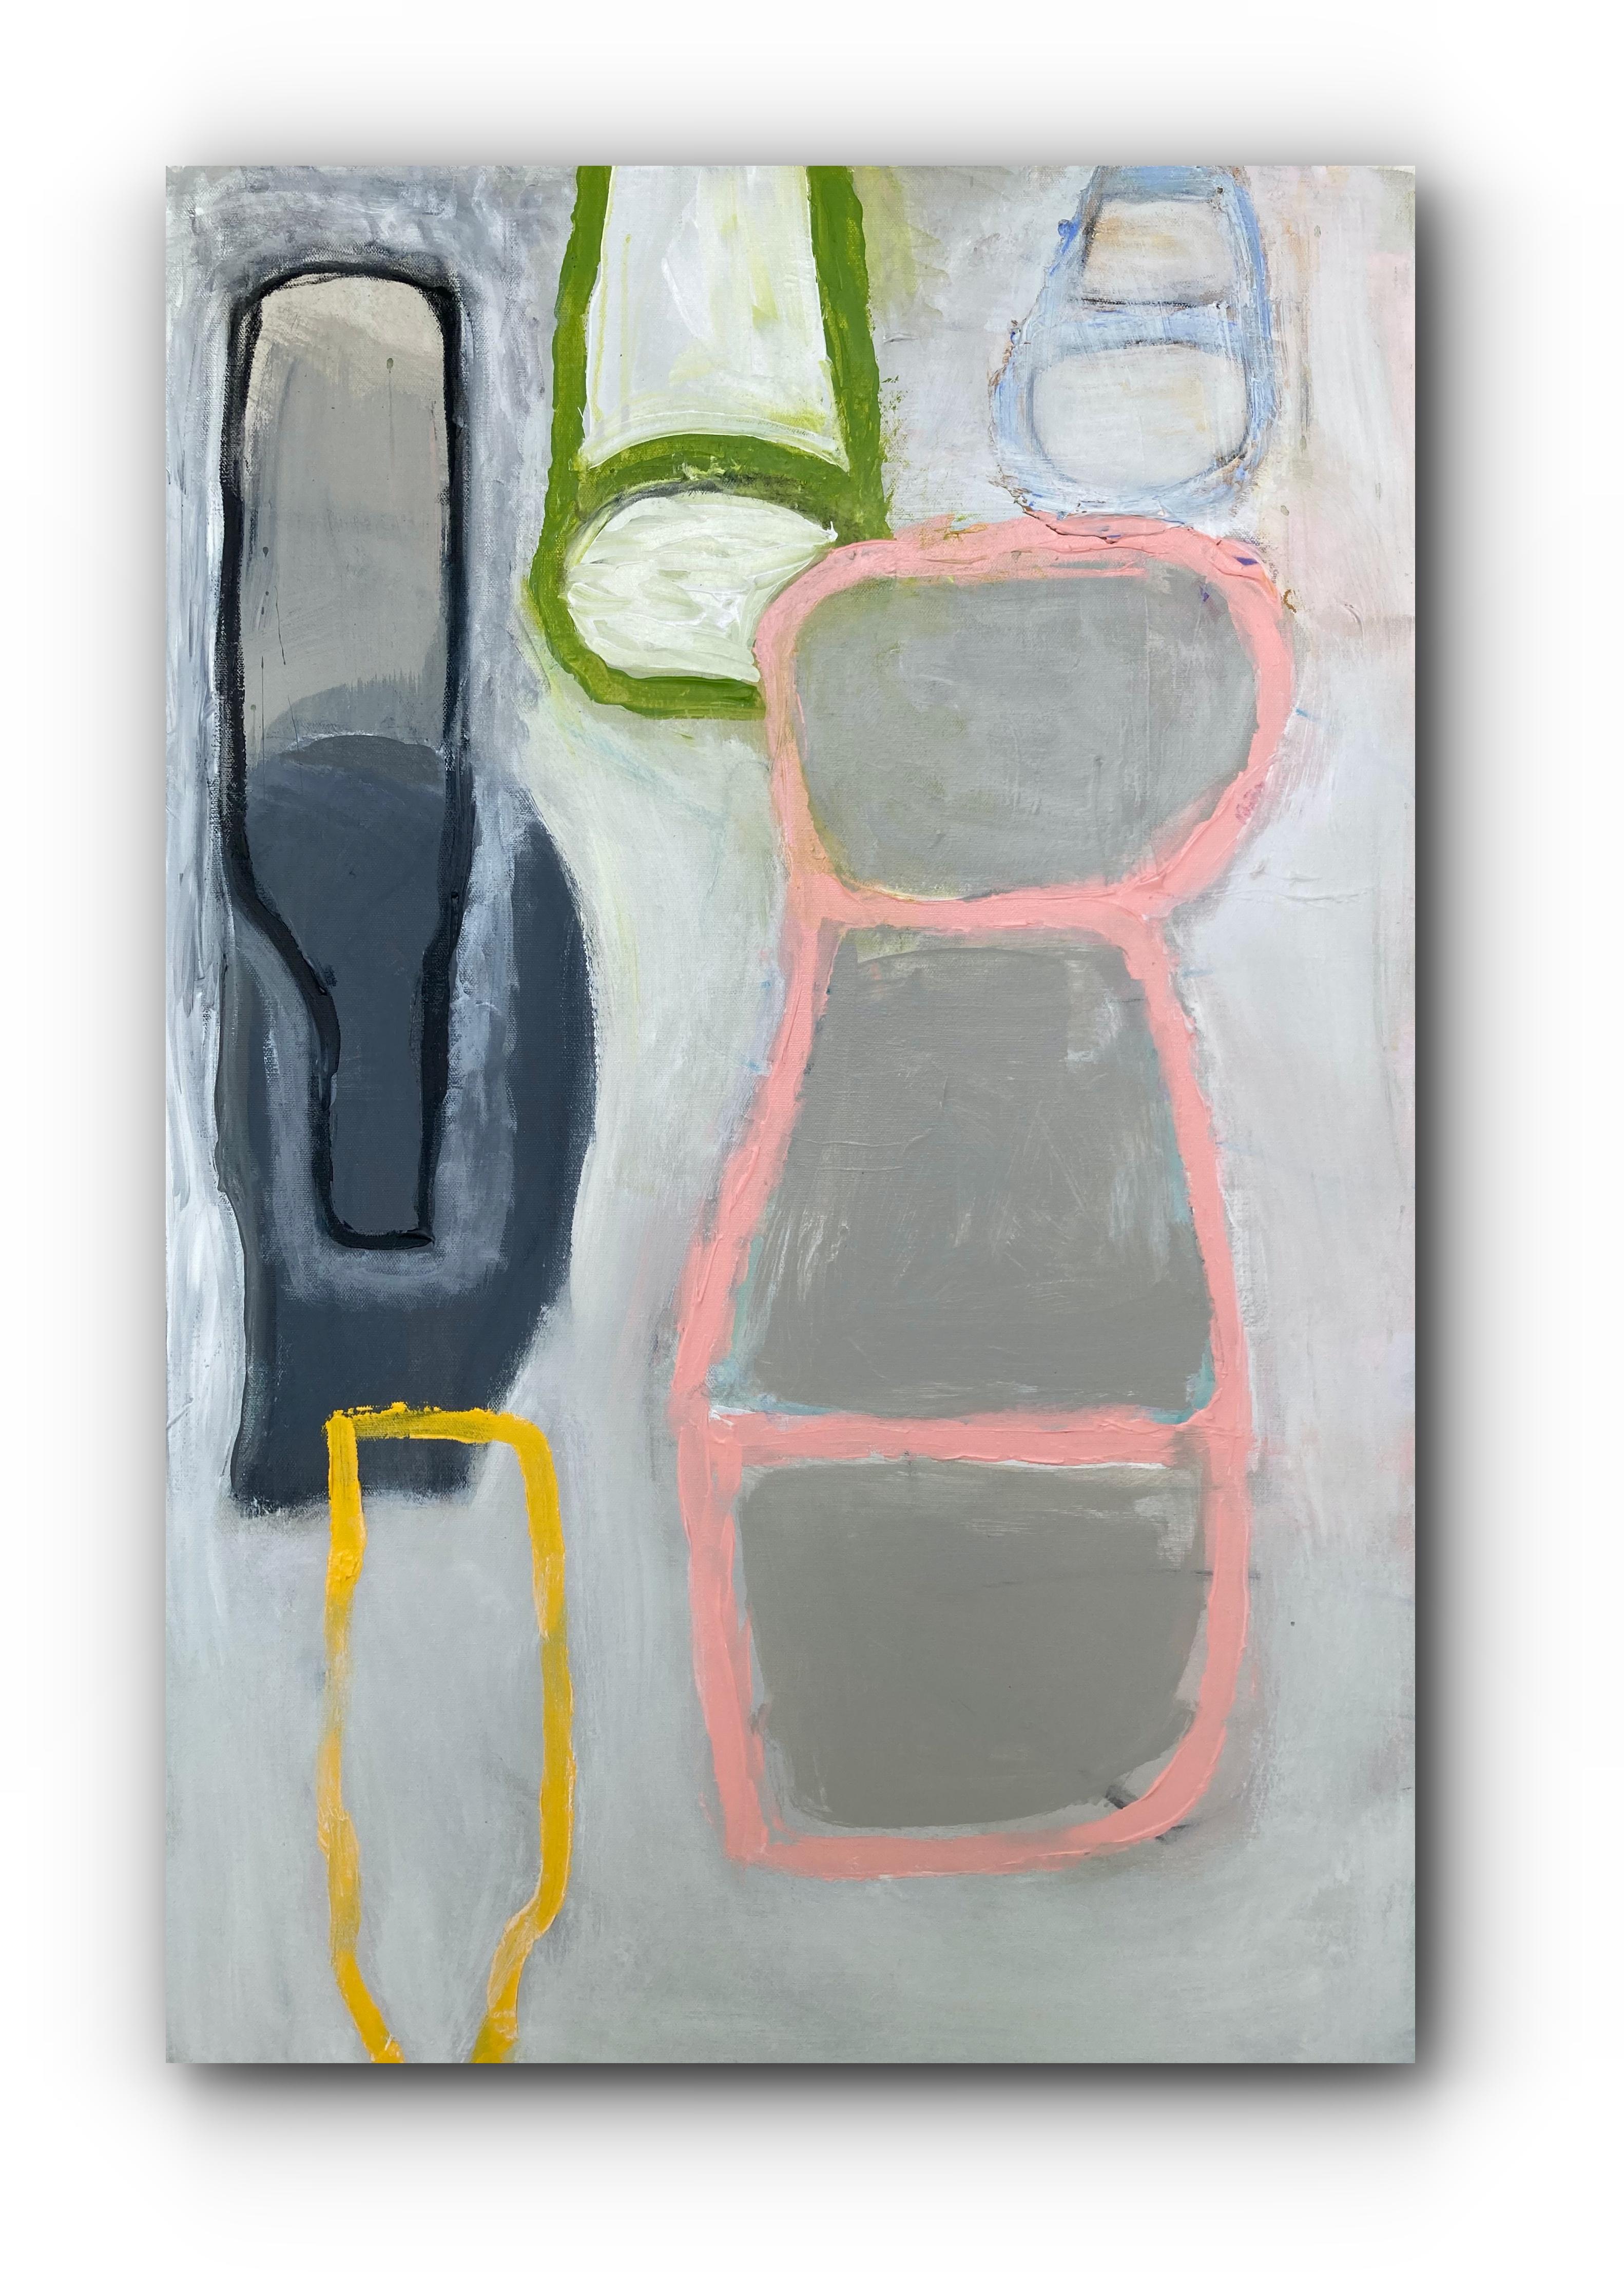 Abstract Painting Guy Lyman - « De Gustibus » - Grande peinture abstraite contemporaine